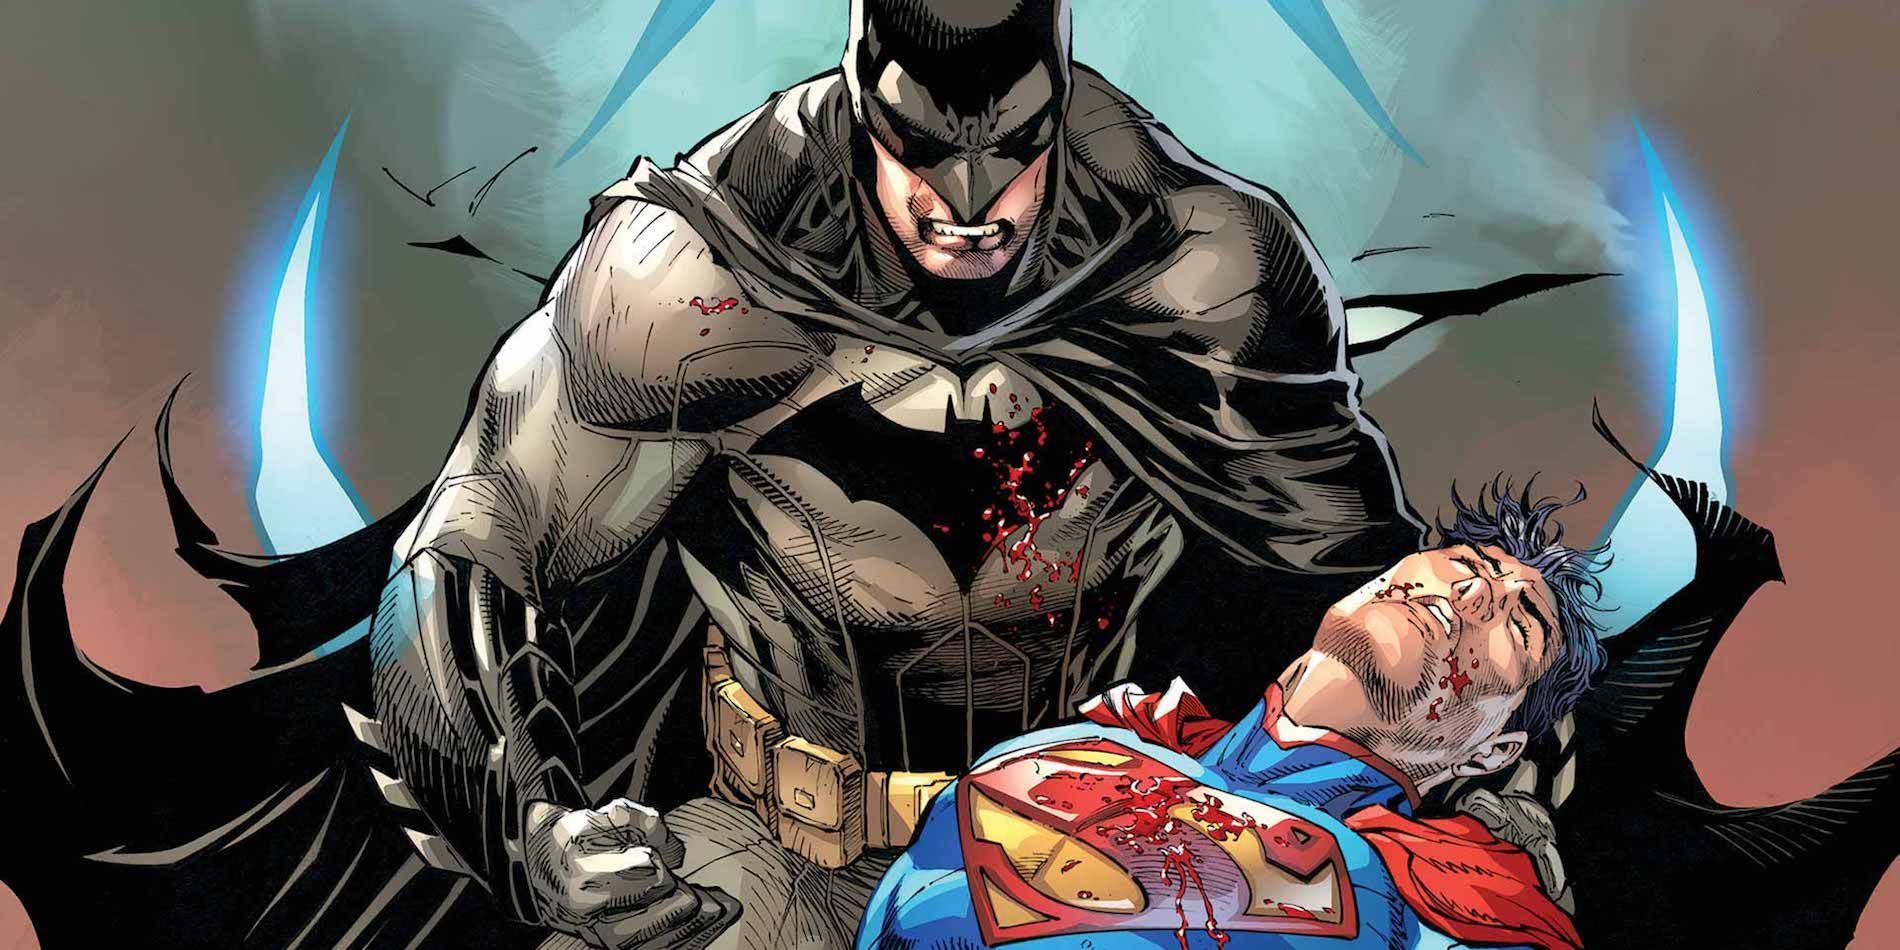 Batman holding a bleeding Superman